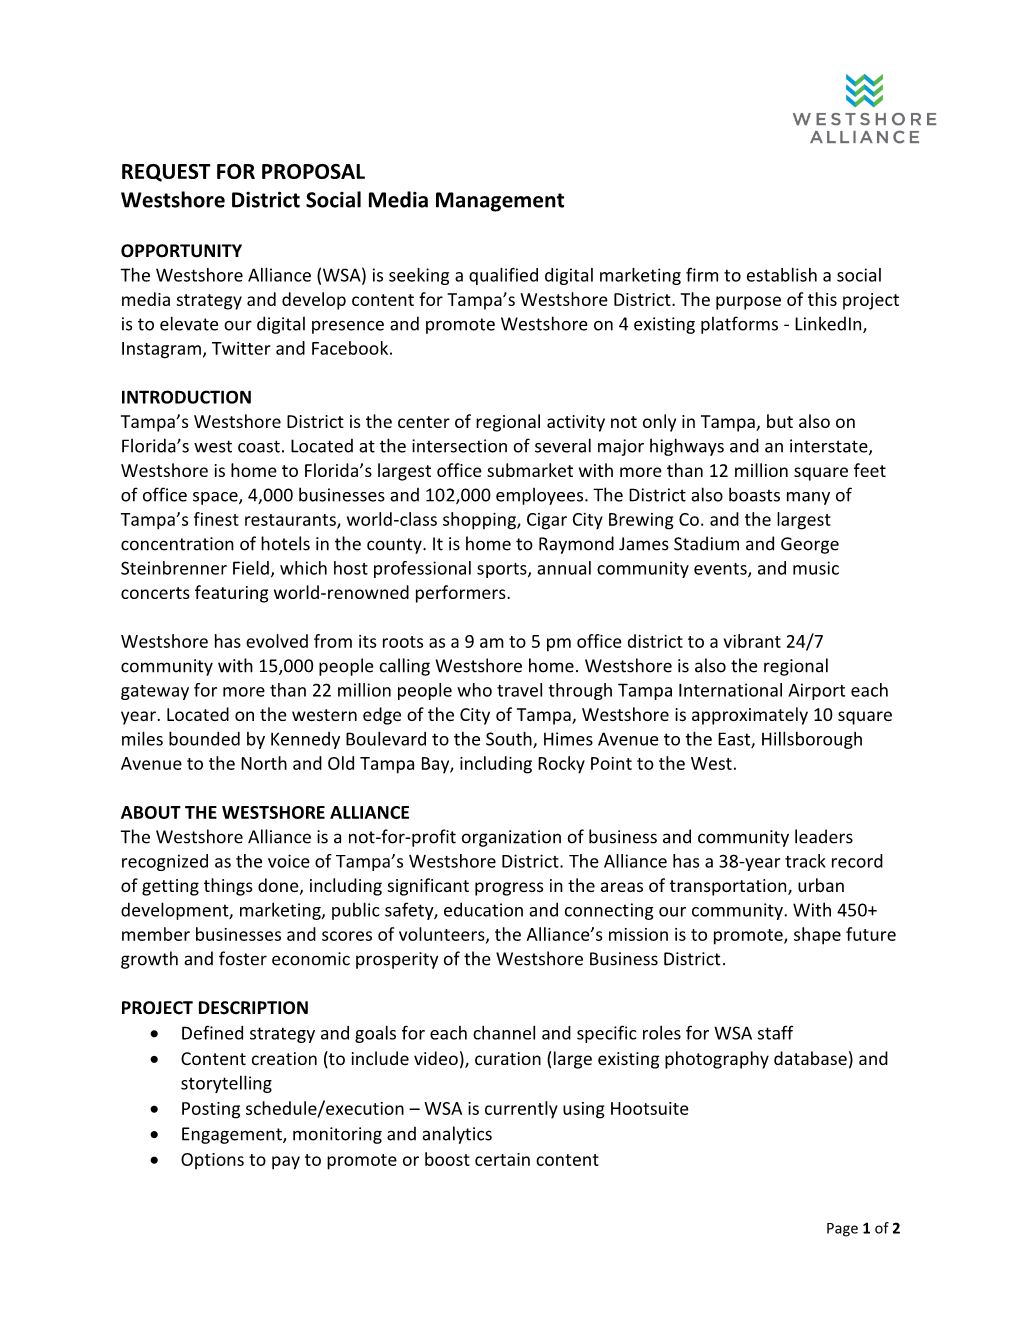 REQUEST for PROPOSAL Westshore District Social Media Management